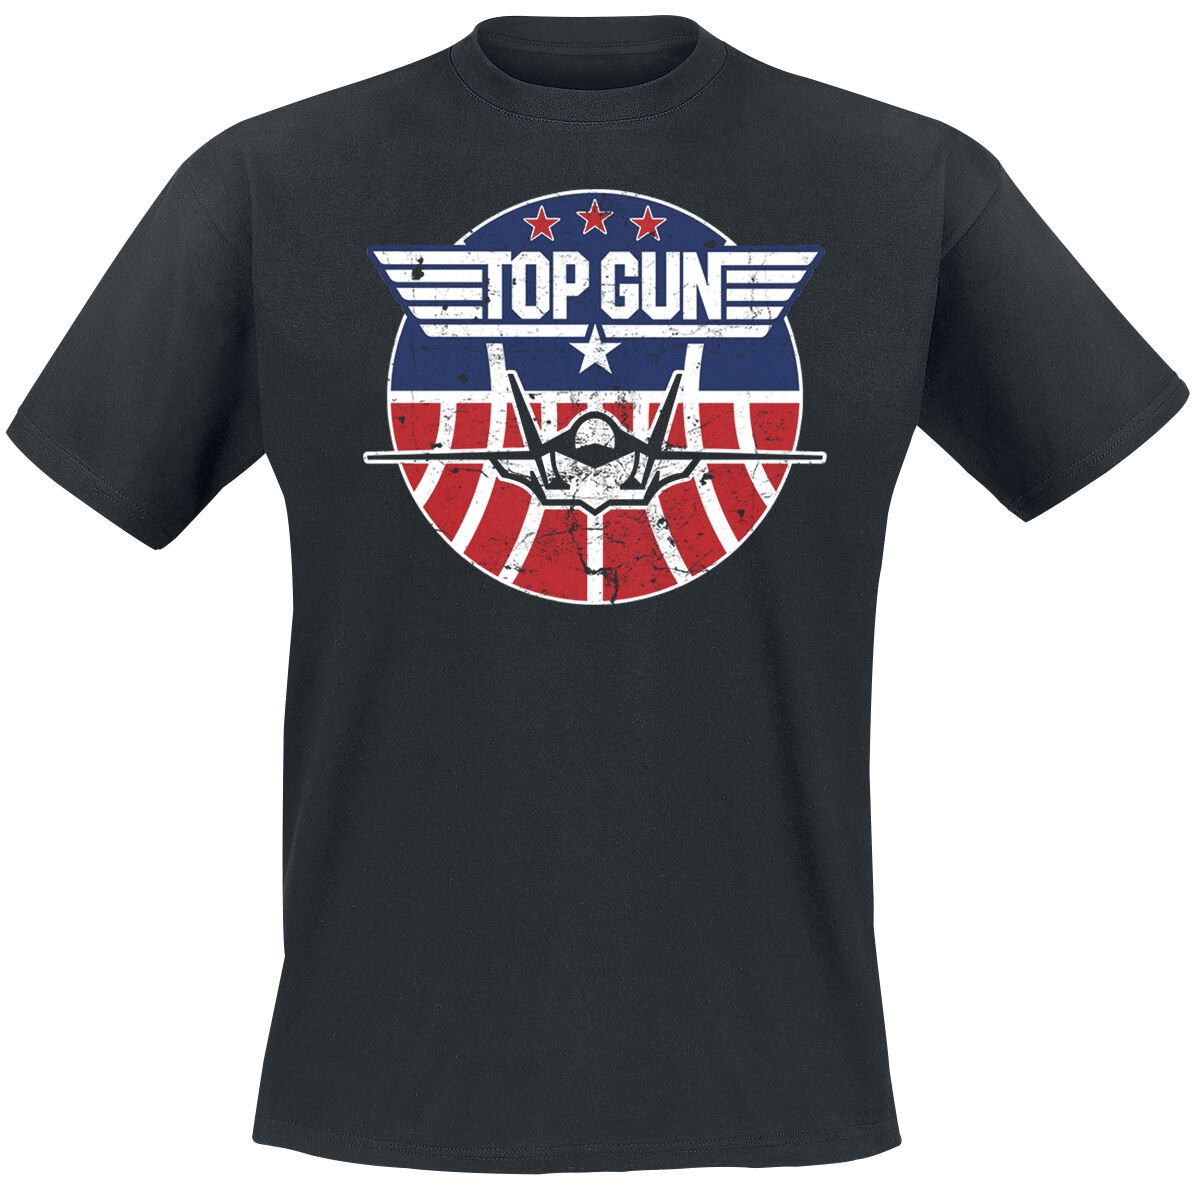 Top Gun T-Shirt - Maverick - Tomcat - S bis 5XL - für Männer - Größe 3XL - schwarz  - Lizenzierter Fanartikel